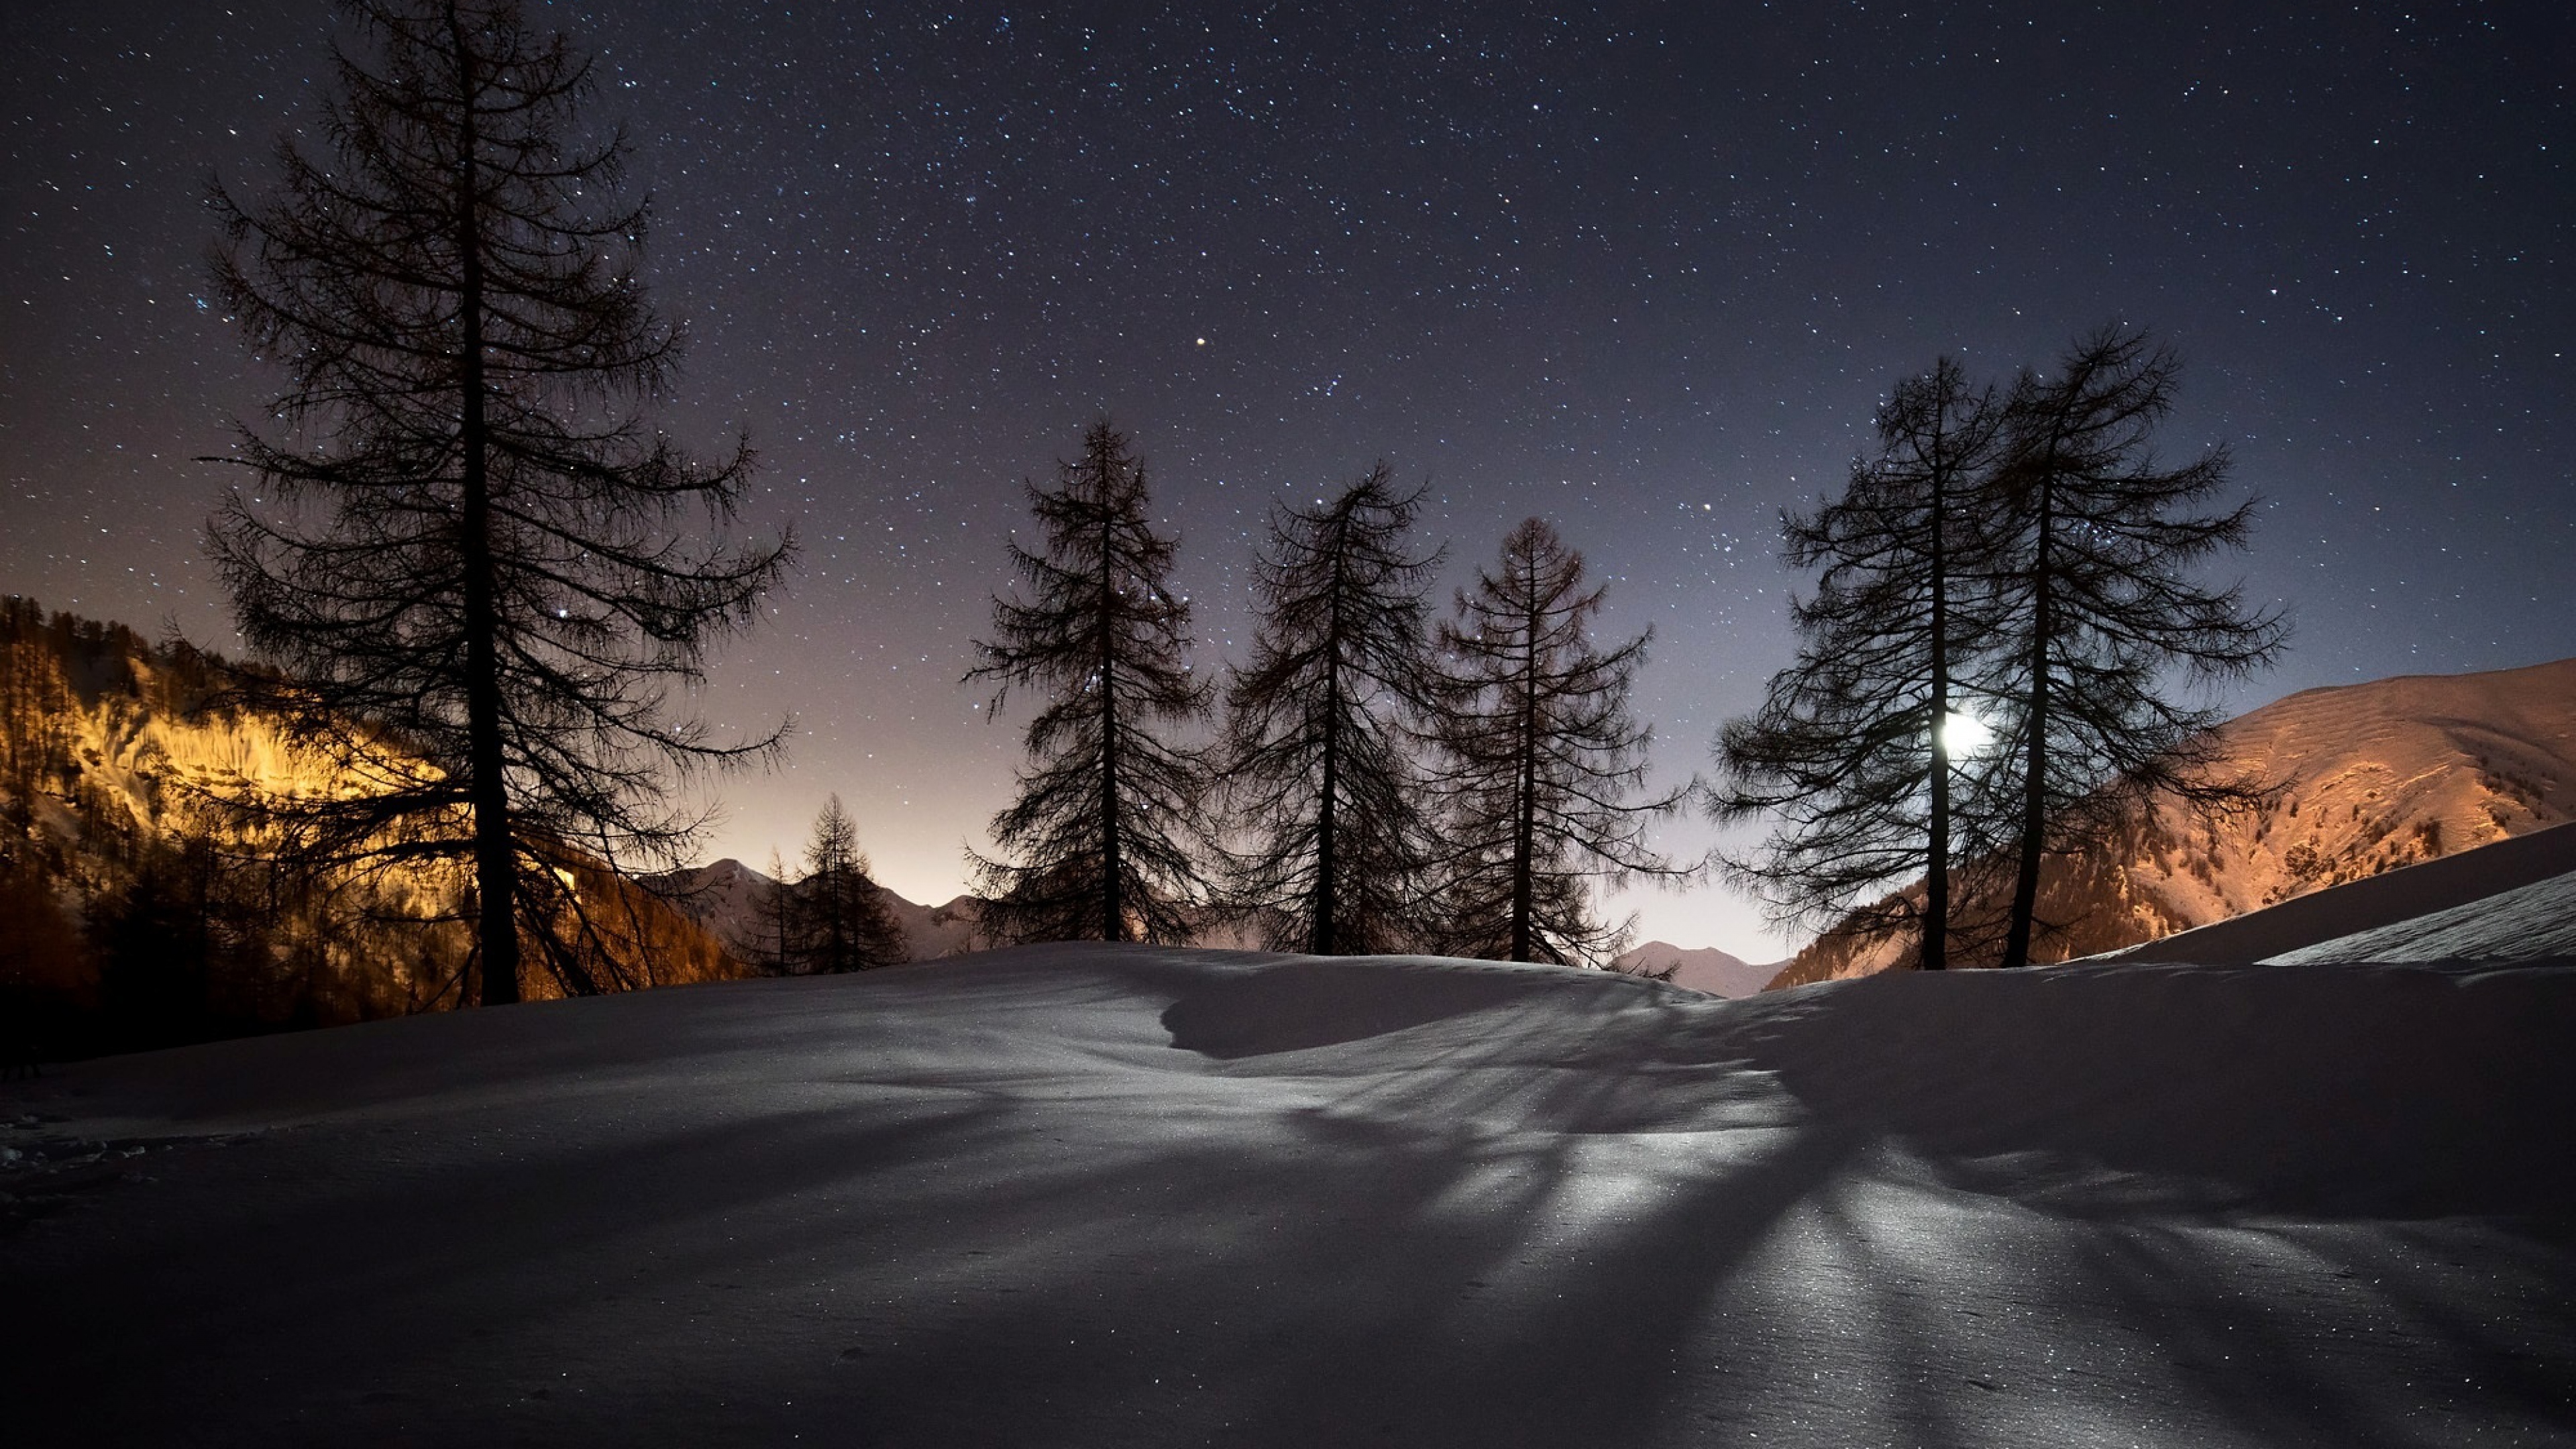 Download Wallpaper 3840x2160 Winter Trees Snow Night Landscape 4K 3840x2160